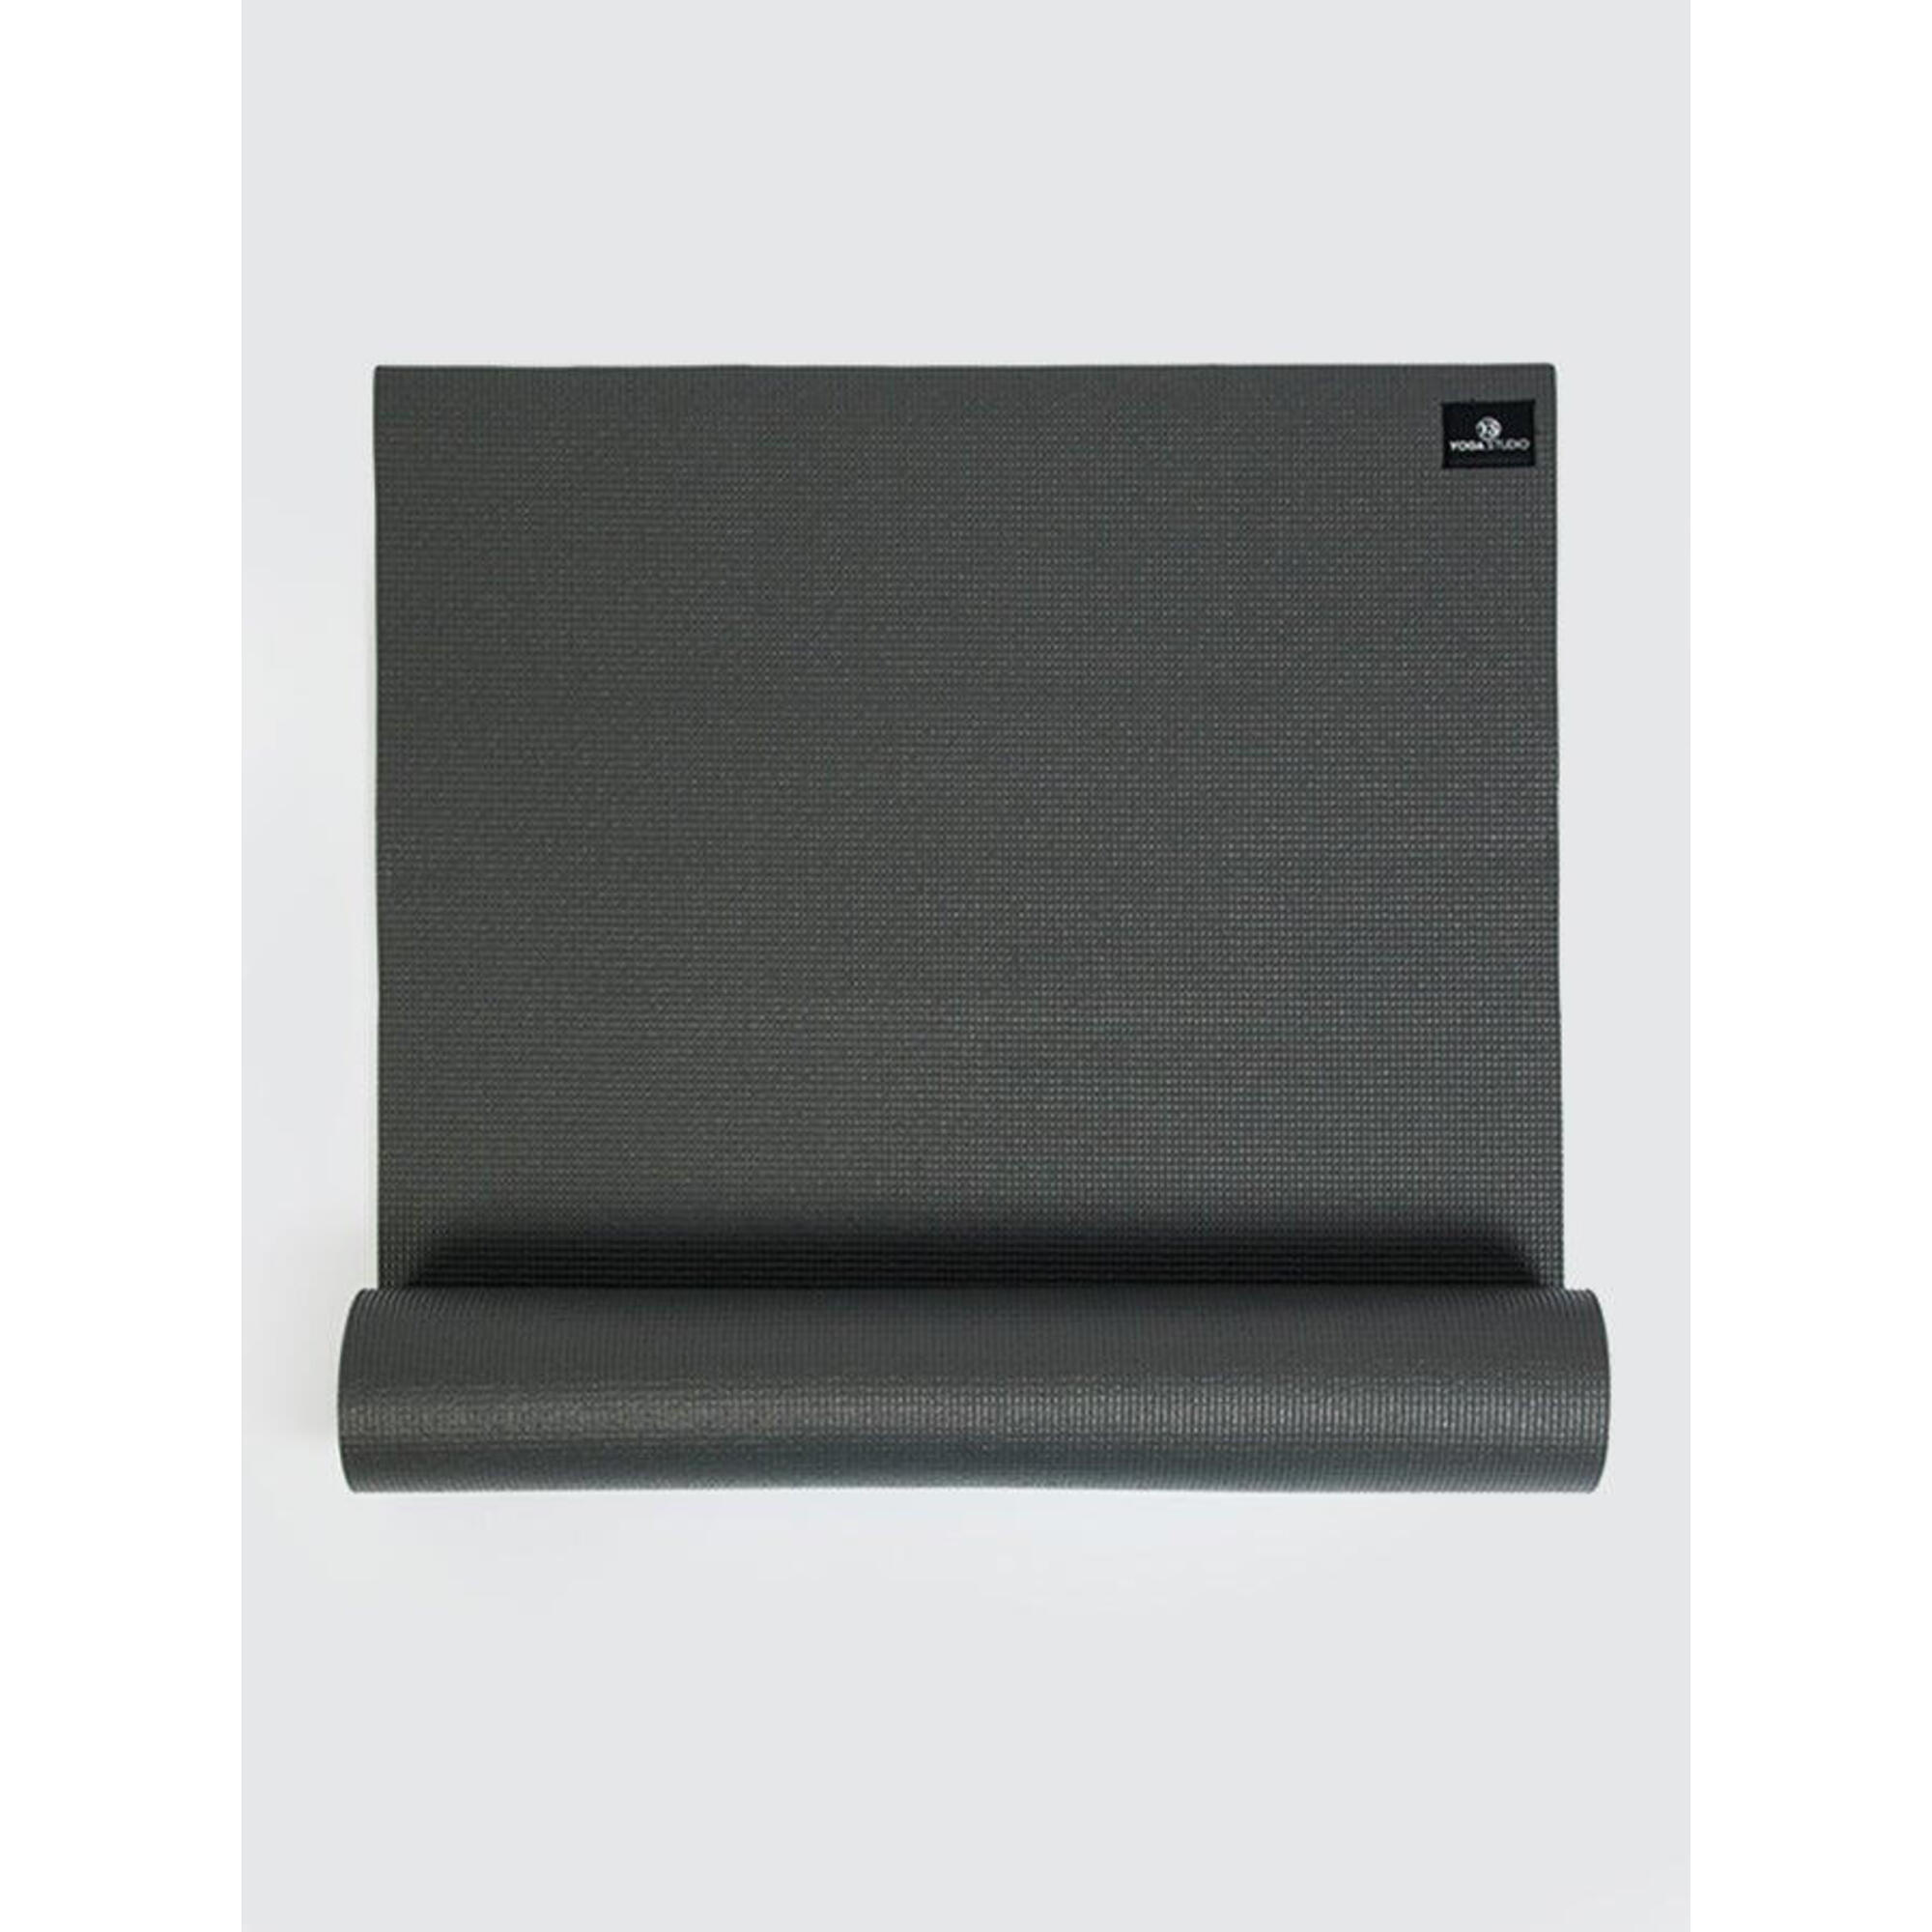 The Yoga Studio Sticky Yoga Mat 6mm - Graphite Grey 1/4